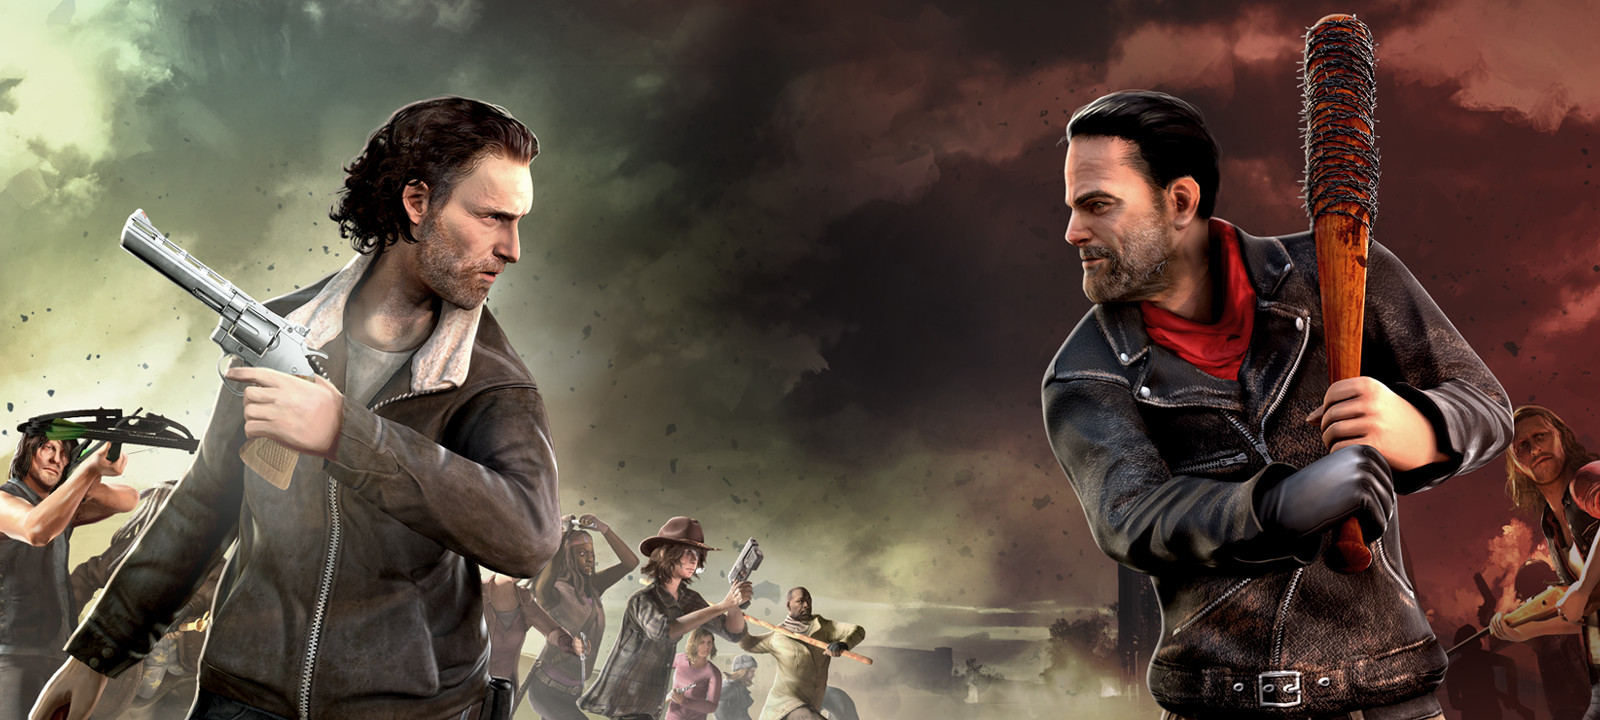 The Walking Dead Season 3 Full Download HD 720p - MoviesCouch